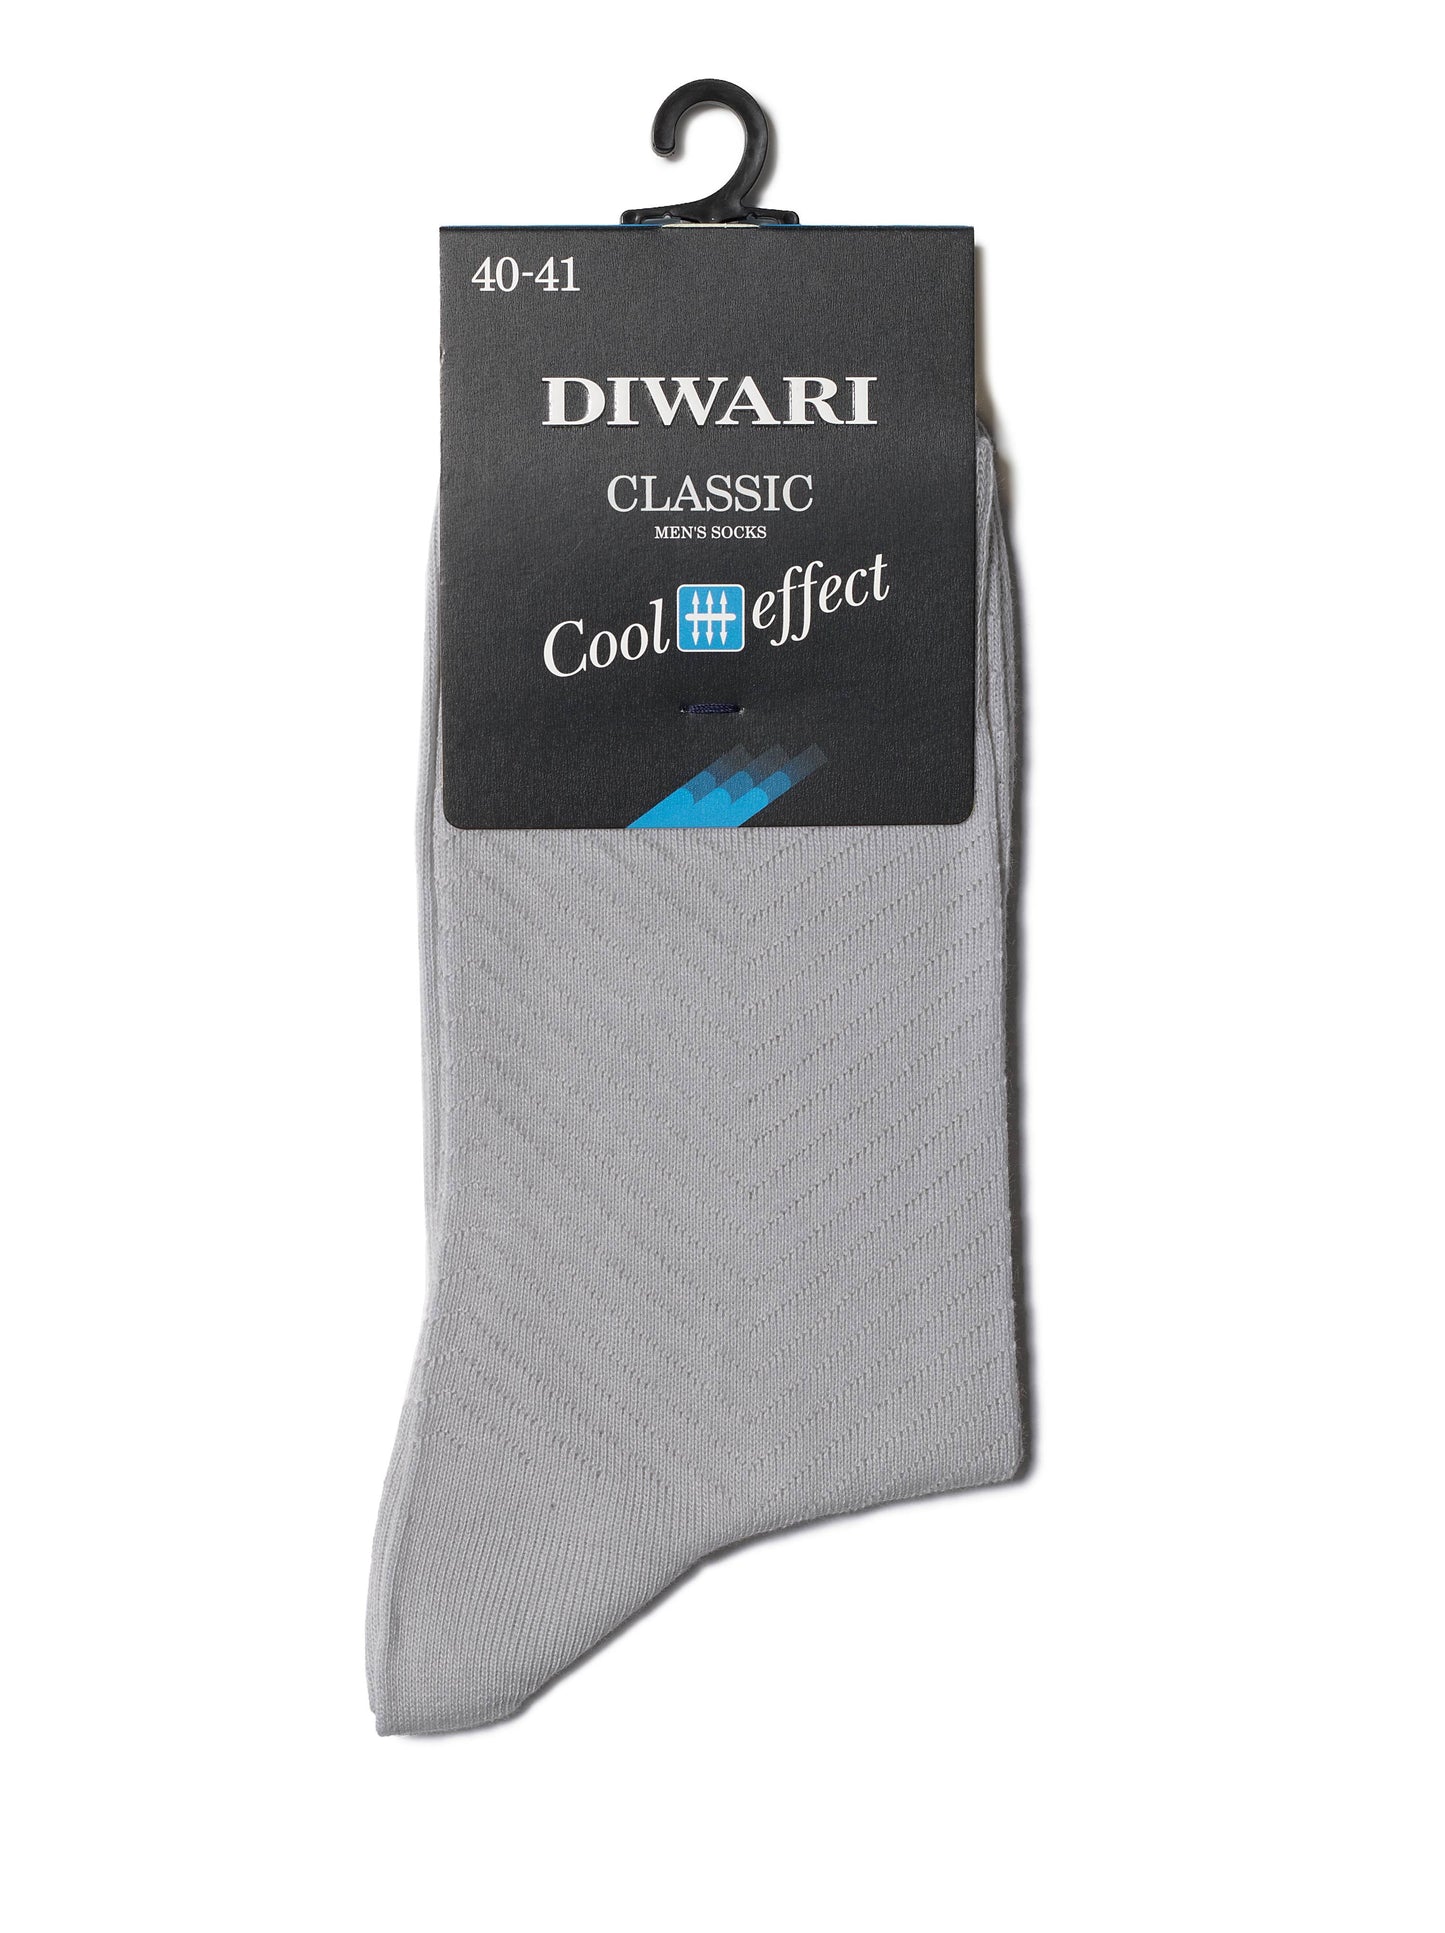 Lot of 6 pairs - Conte Classic Cotton Men's Socks - DiWaRi - Cool Effect #7С-23СП(010)